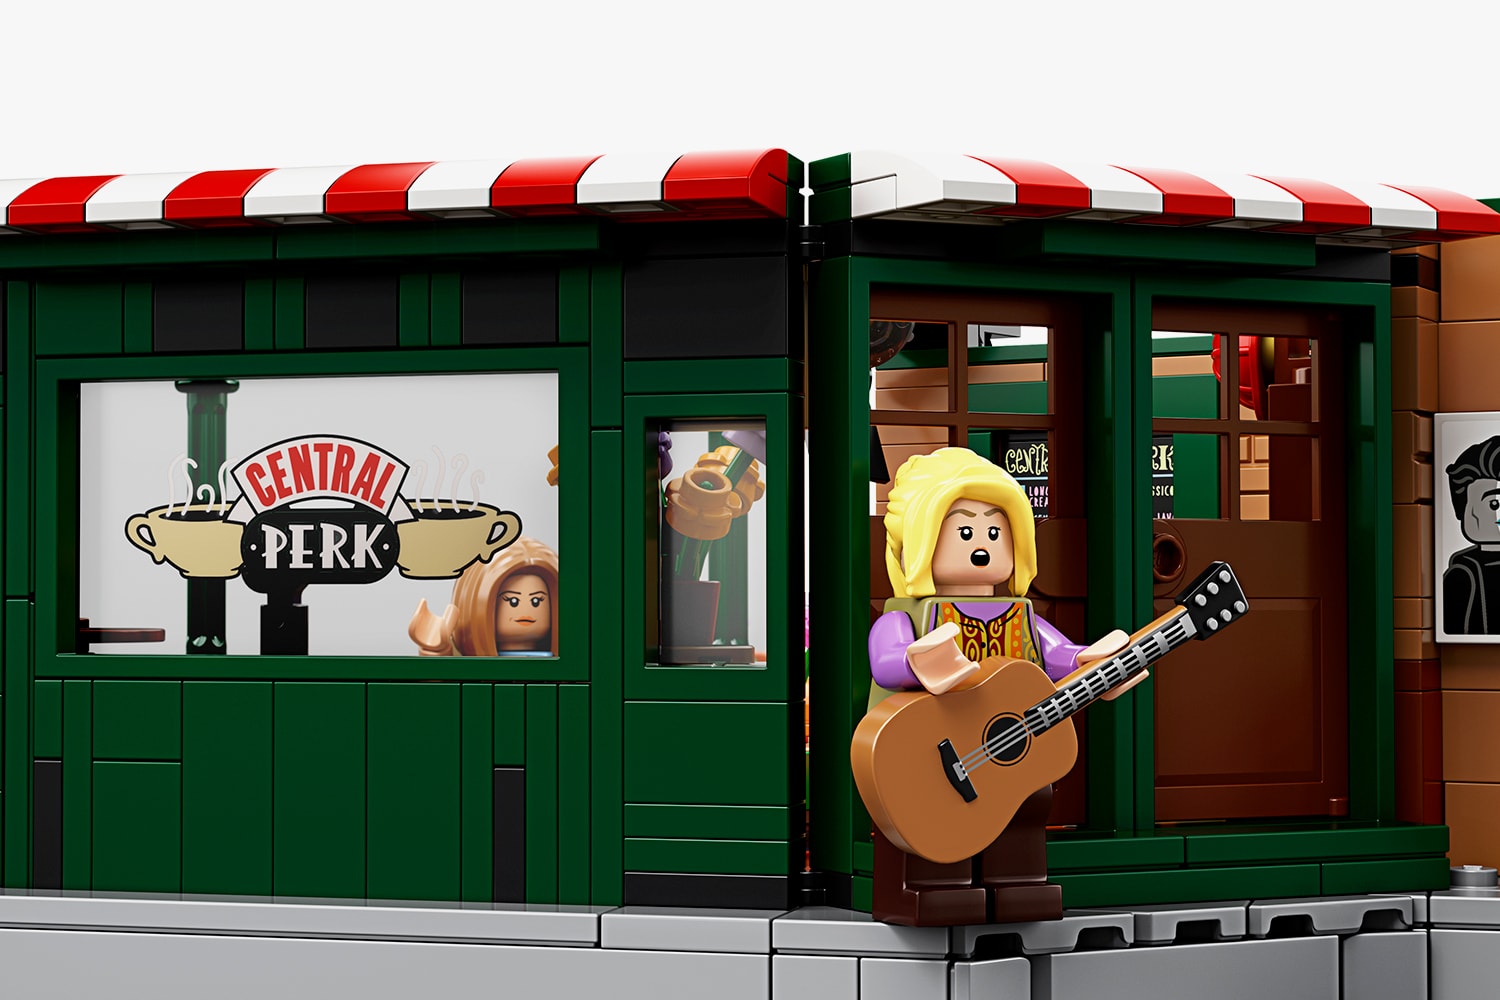 LEGO Friends Central Perk TV Set Release Info 90s television sitcom ross rachel chandler joe monica gunther toys replica collectibles 